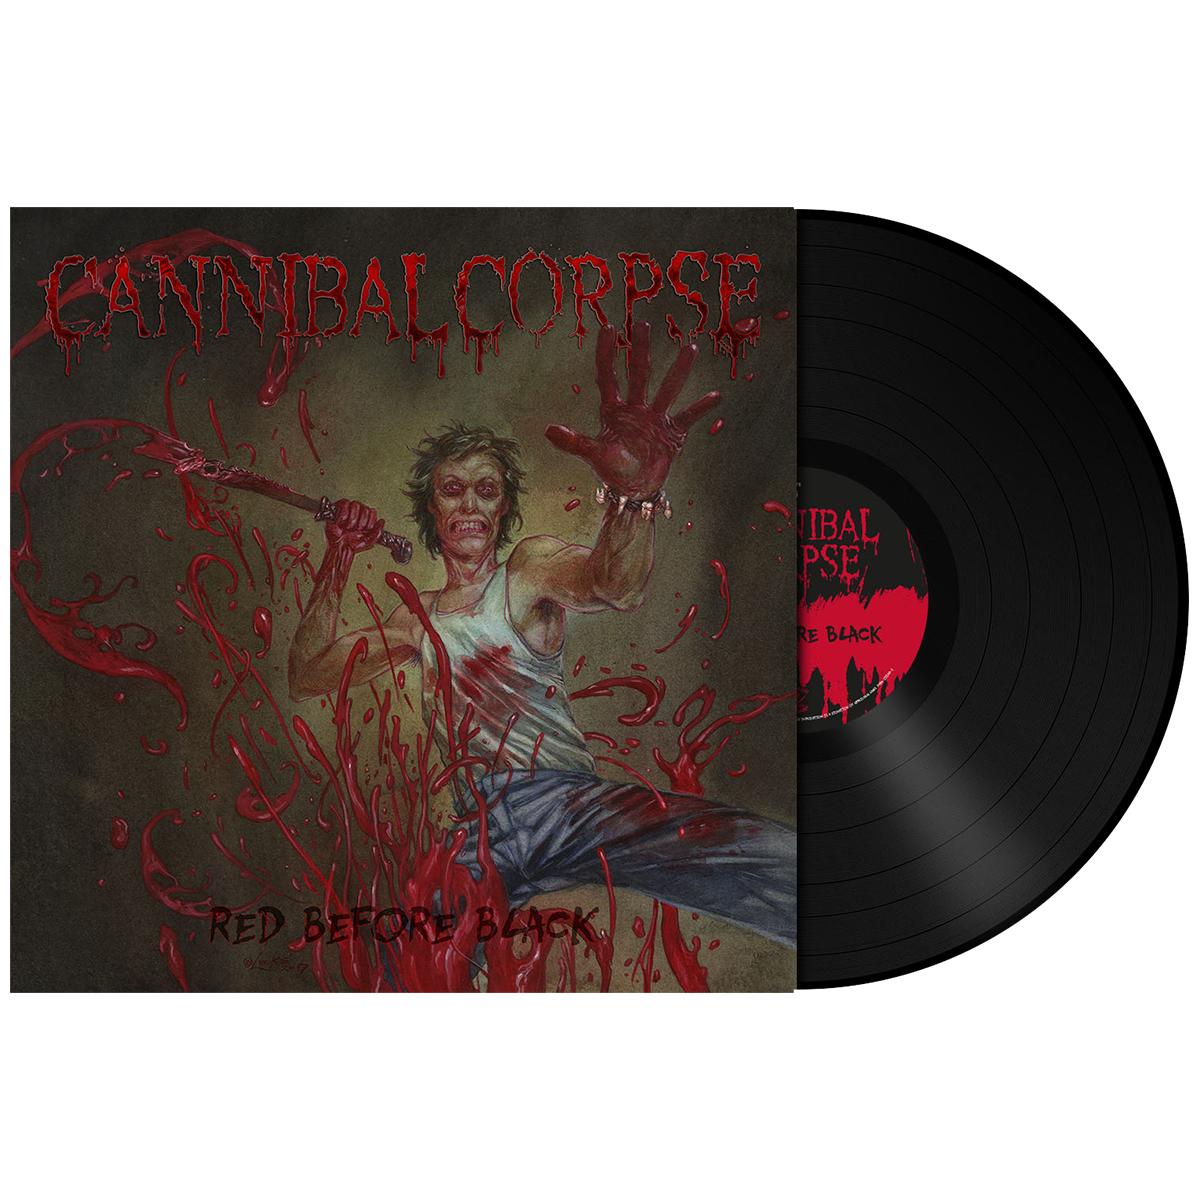 Cannibal Corpse "Red Before Black" 180g Black Vinyl